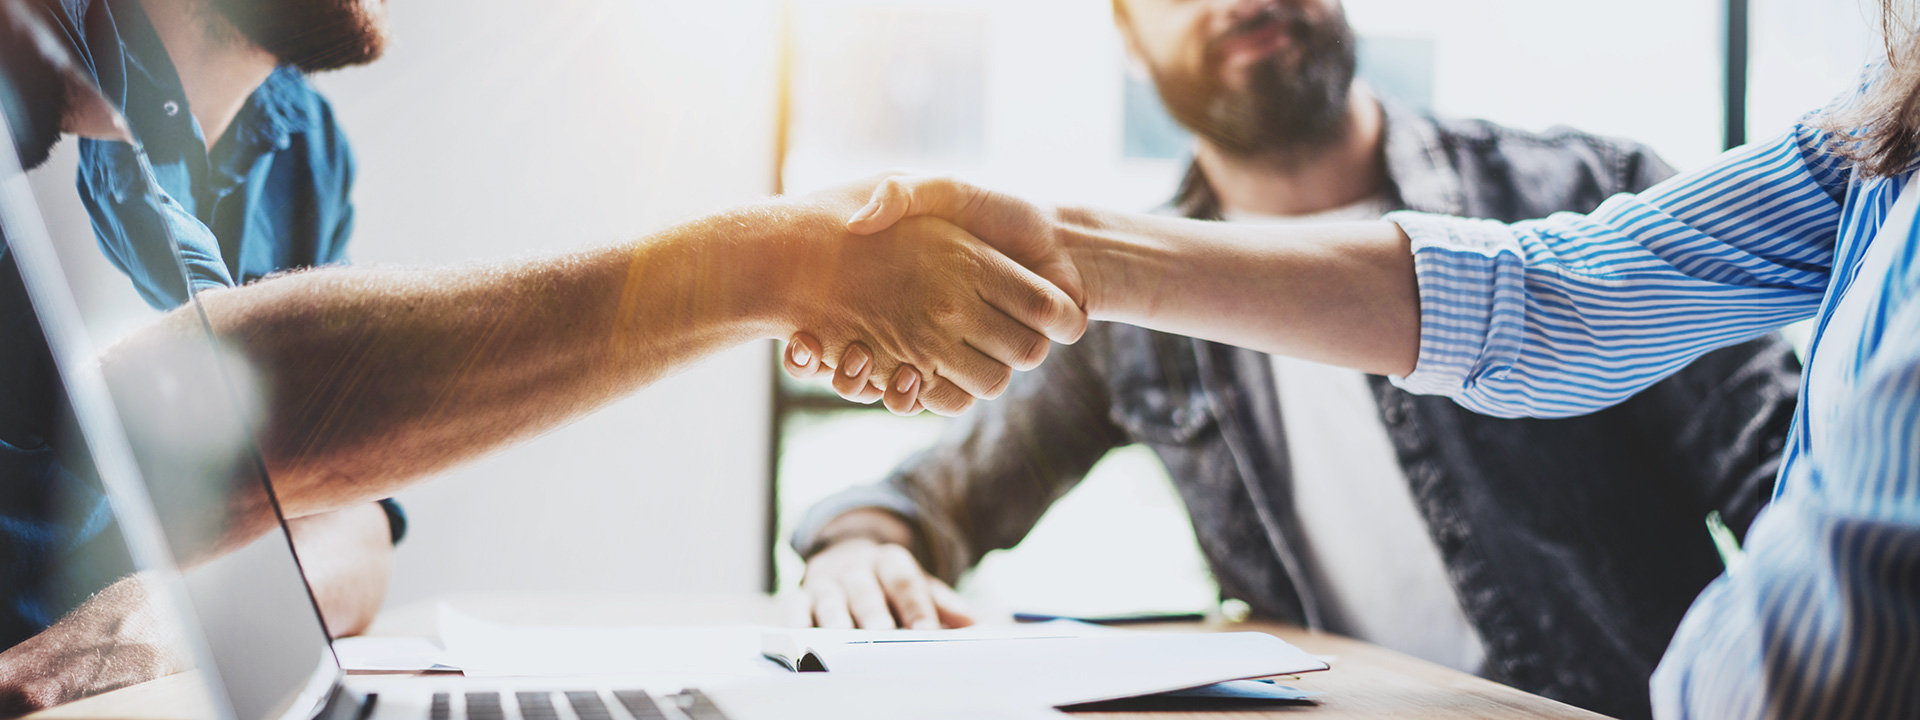 Business partnership handshake concept